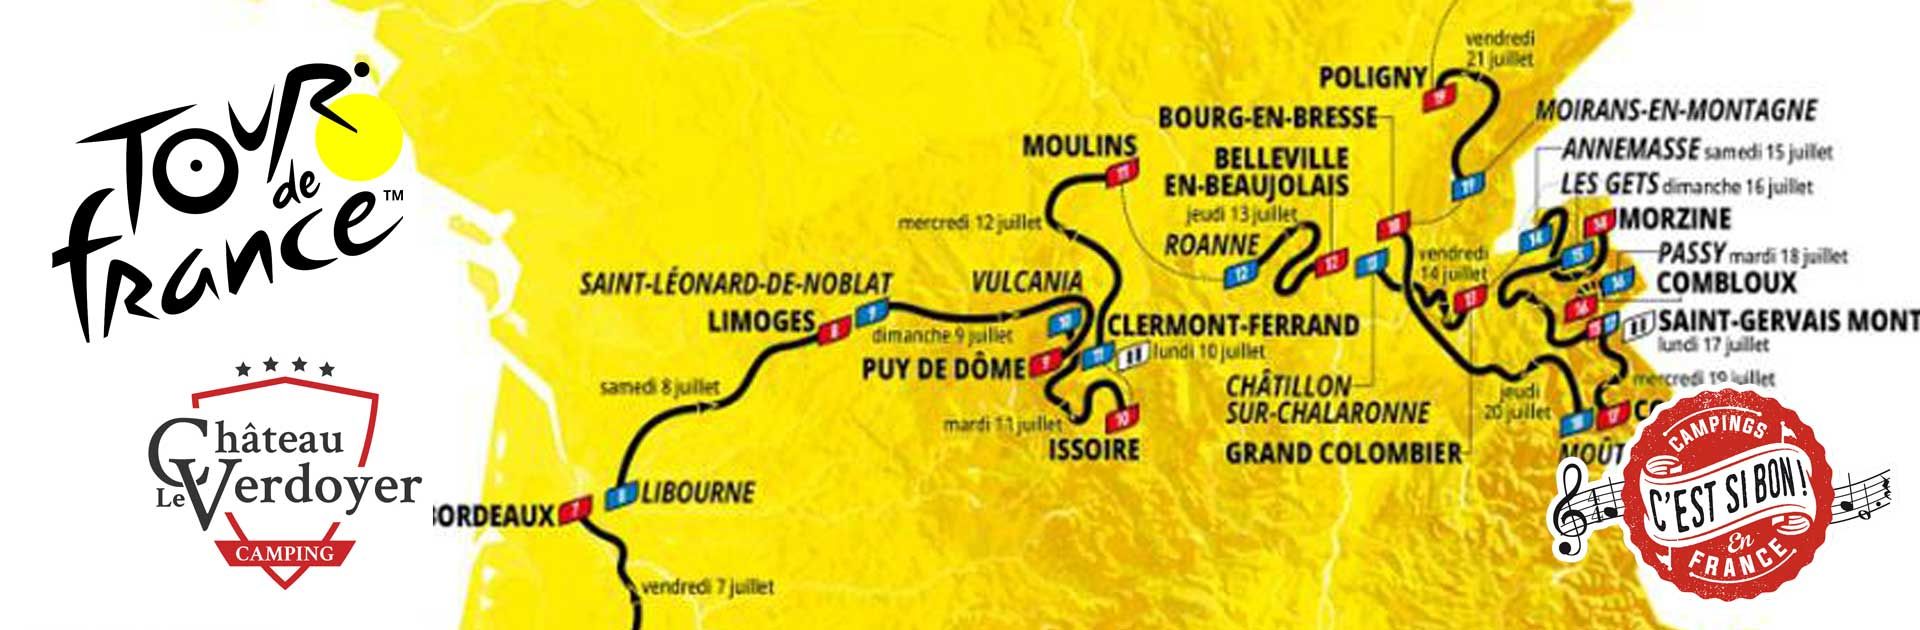 Vélo Cycliste tour de France Dordogne camping